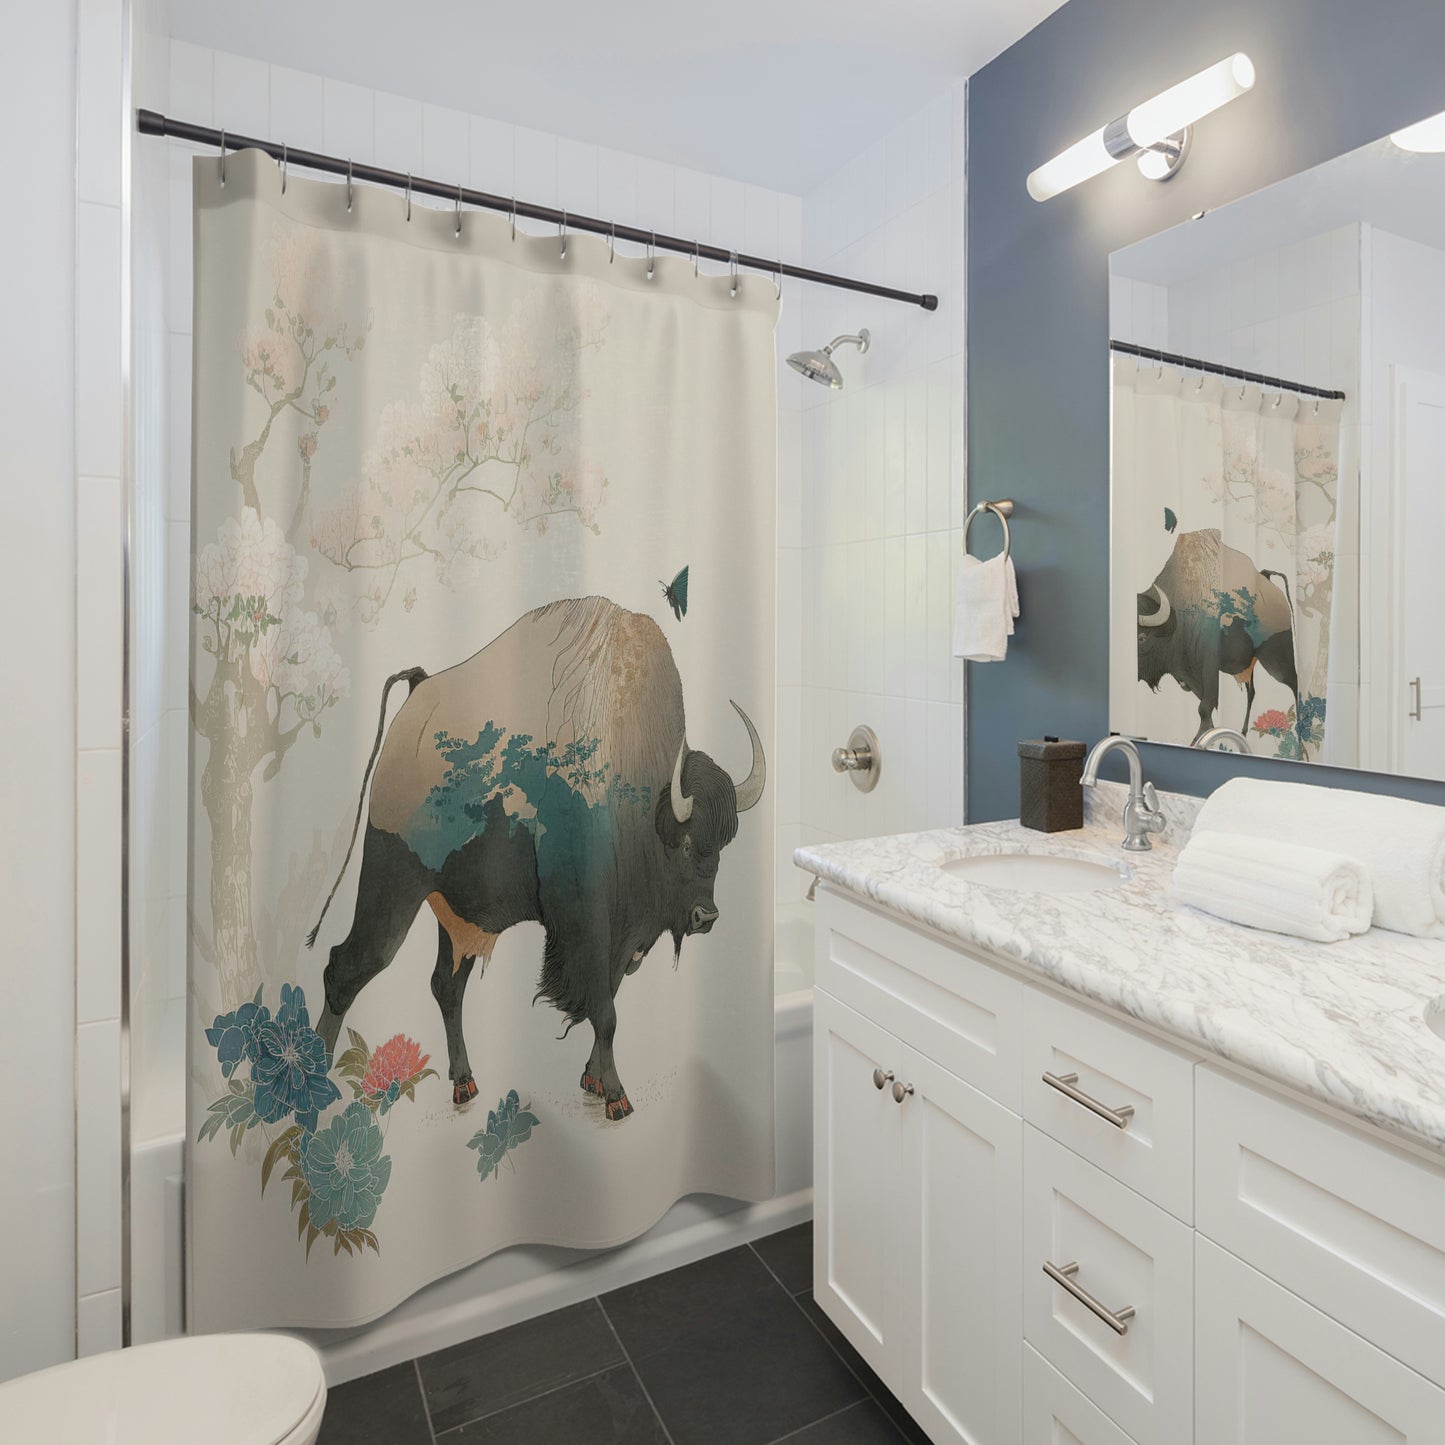 Crane Shower Curtain, Japanese Bathroom, Buffalo, Vintage Japan, Japanese Art, Asian Bathroom, Ukiyo-e Inspired Home Decor